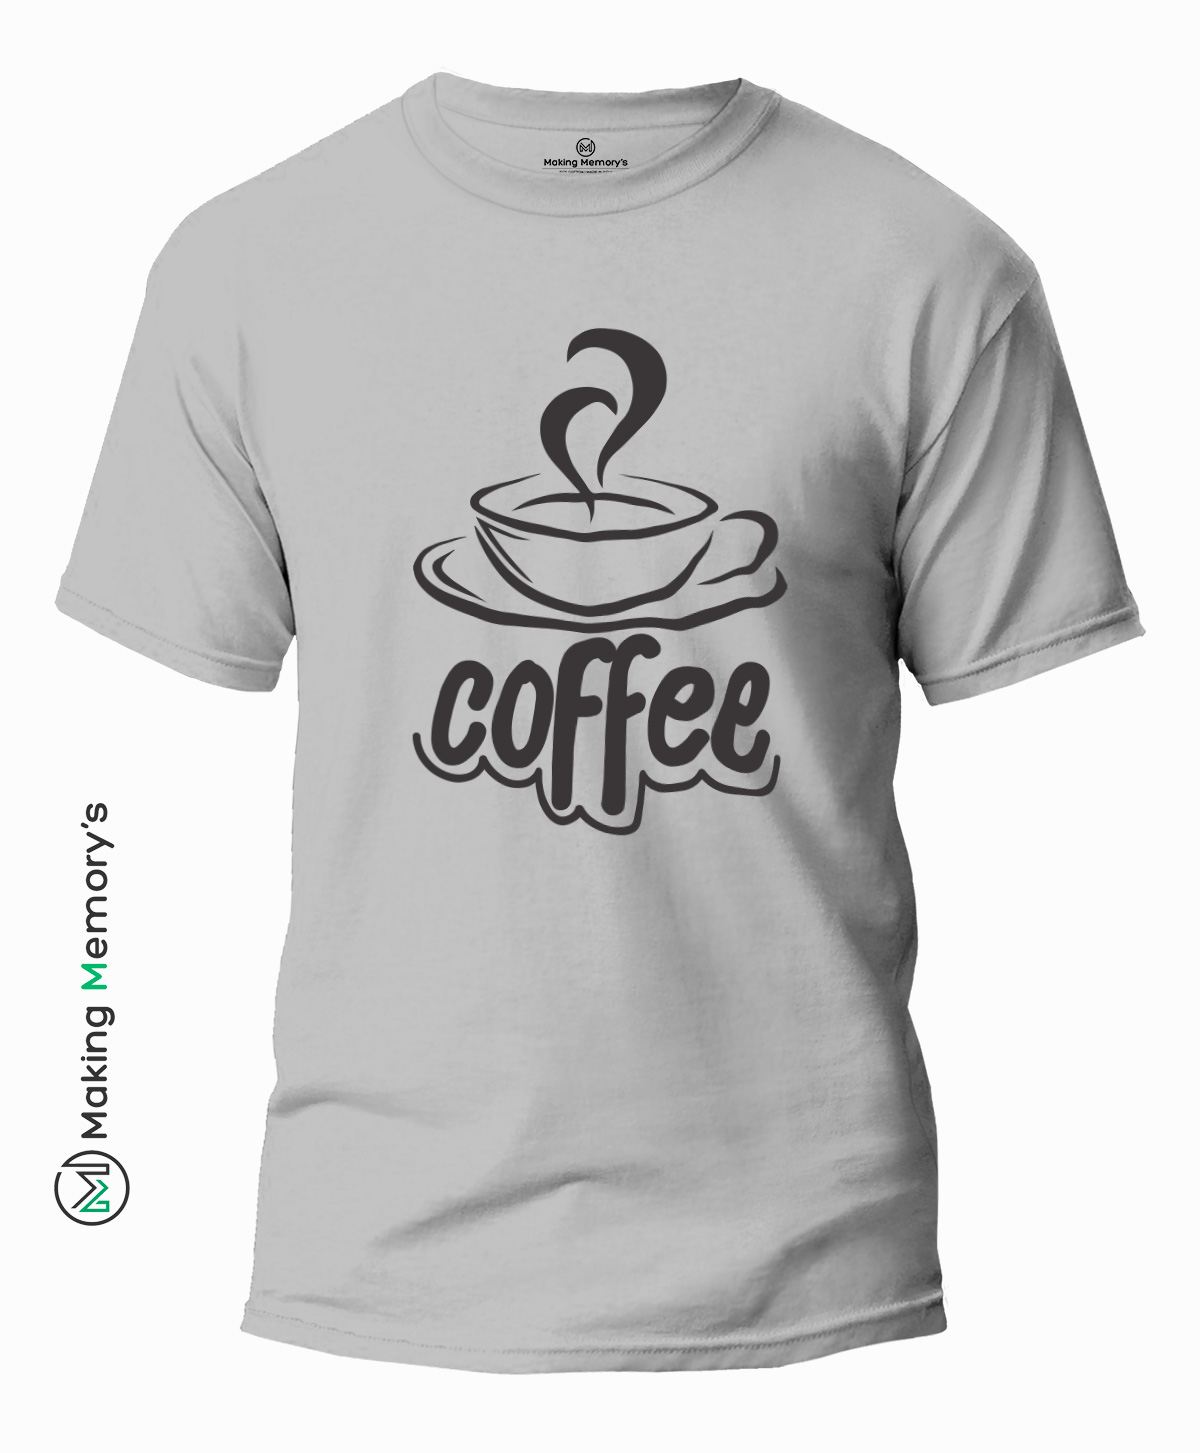 The-Coffee-Gray-T-Shirt